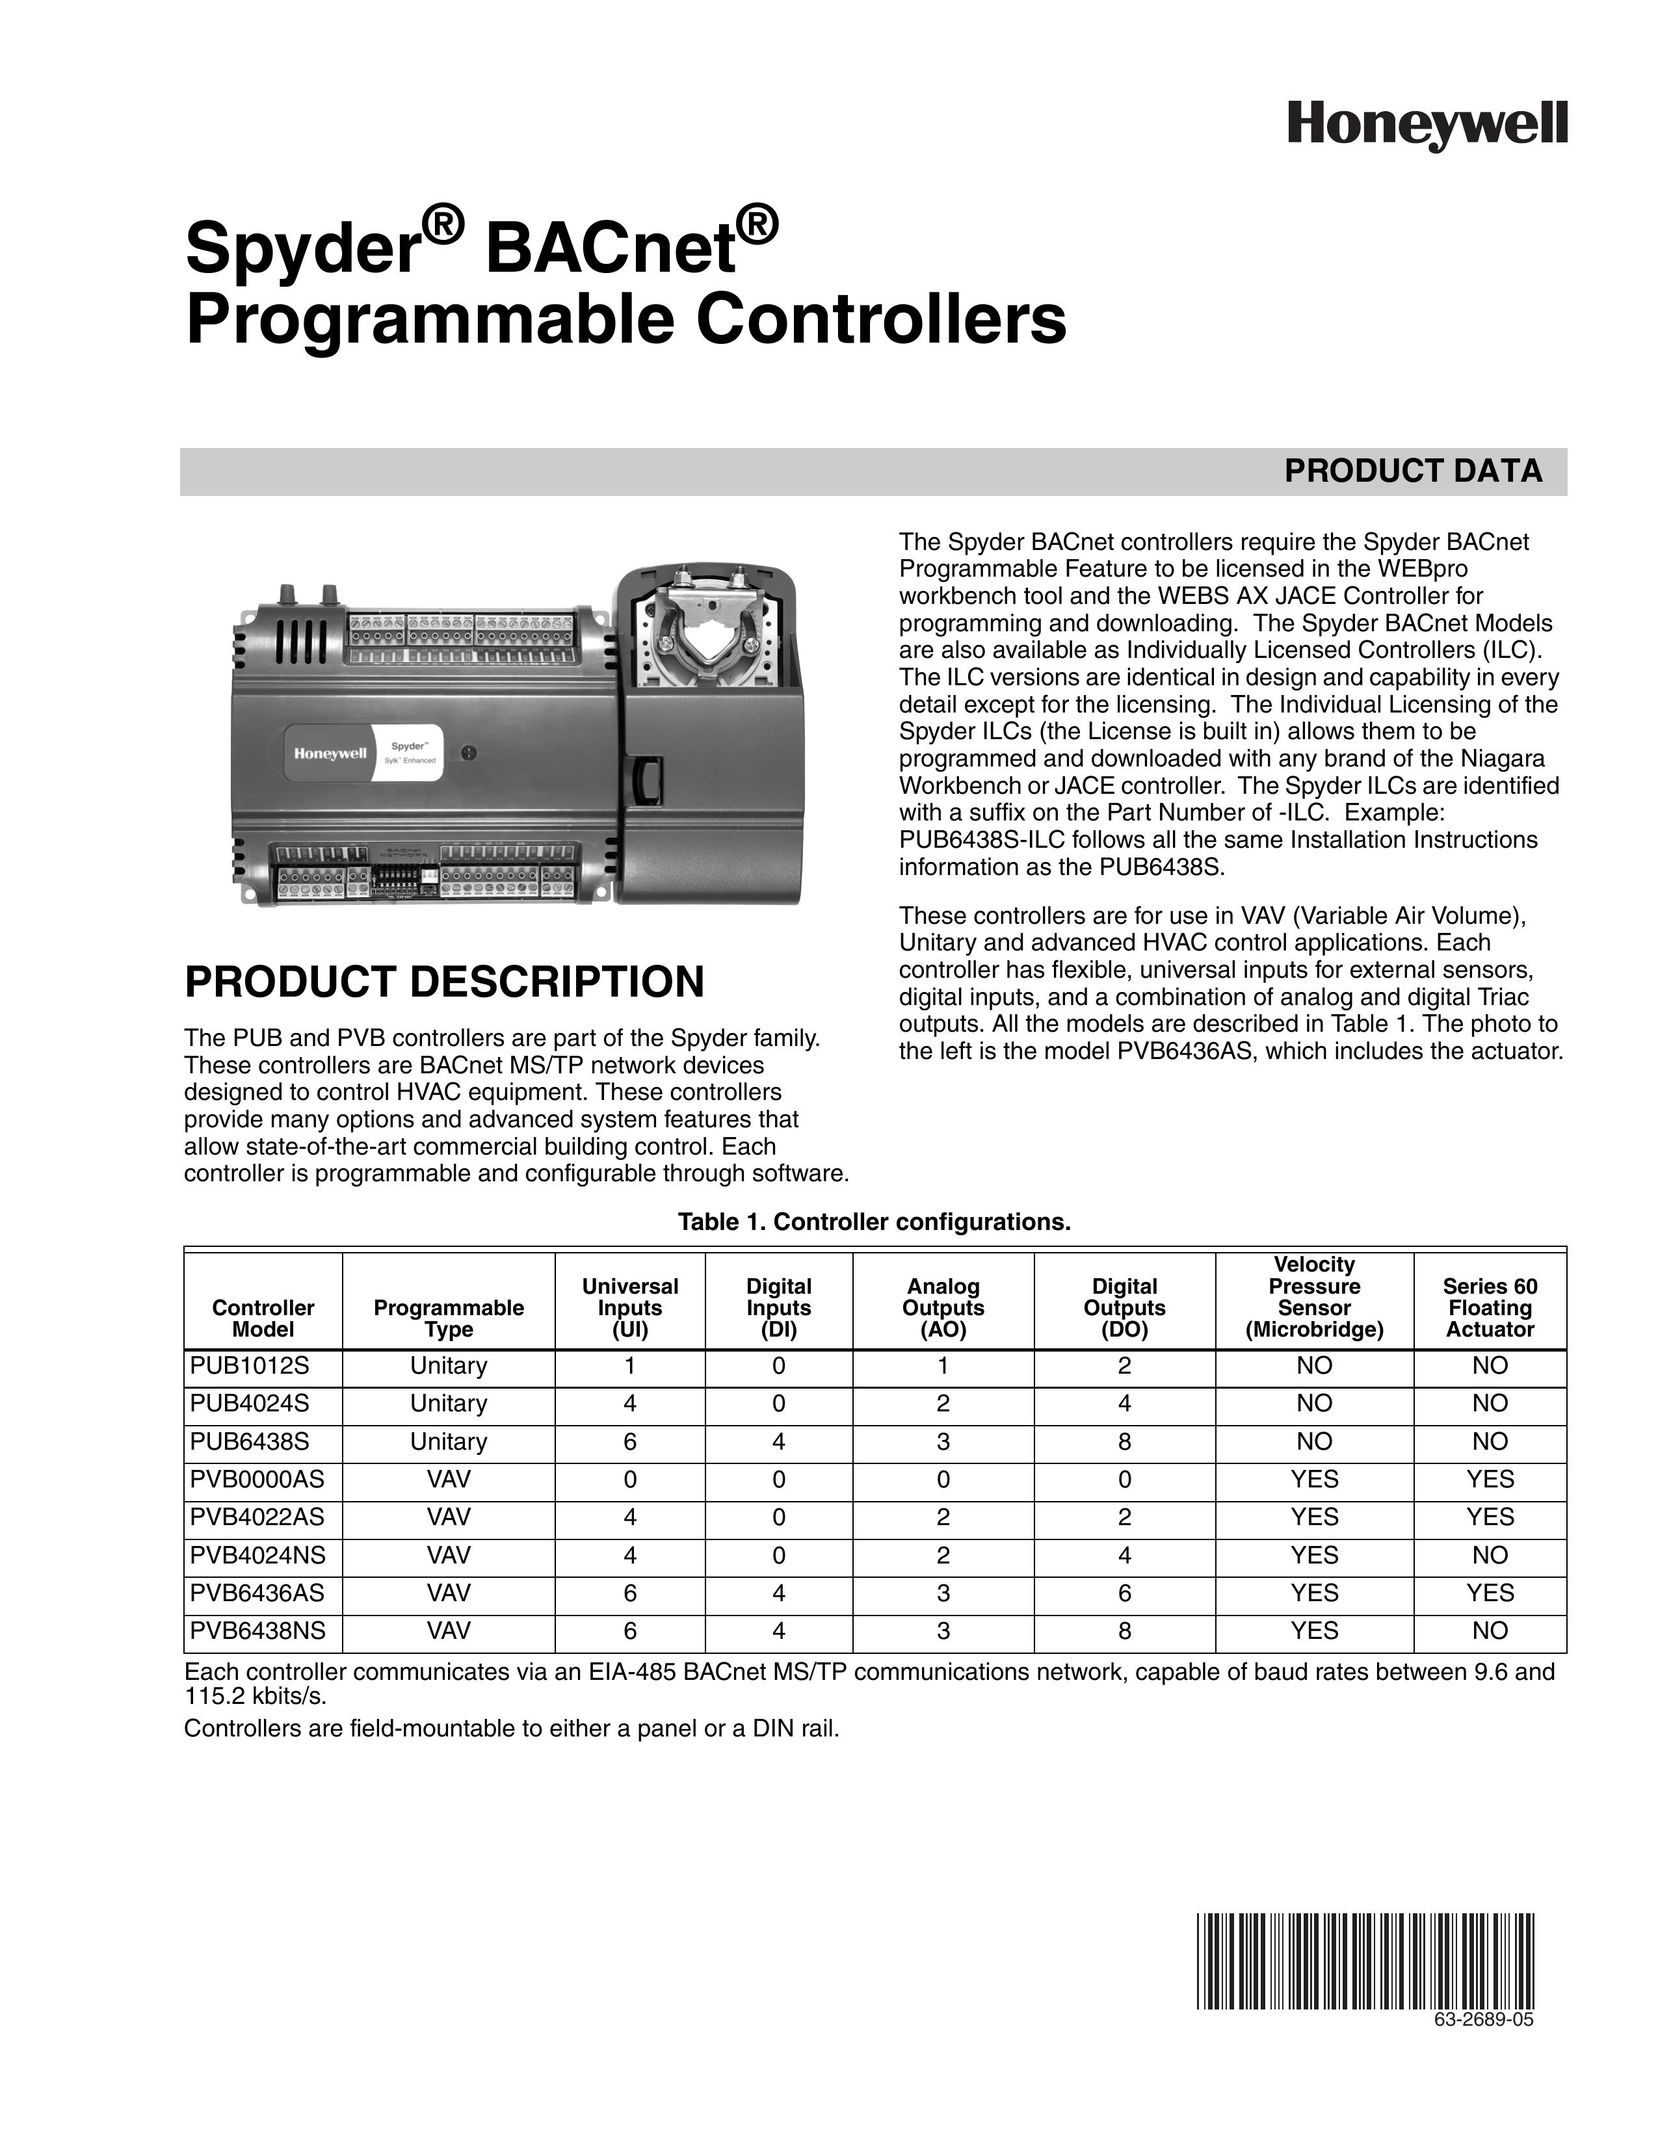 Honeywell PVB6435AS Universal Remote User Manual